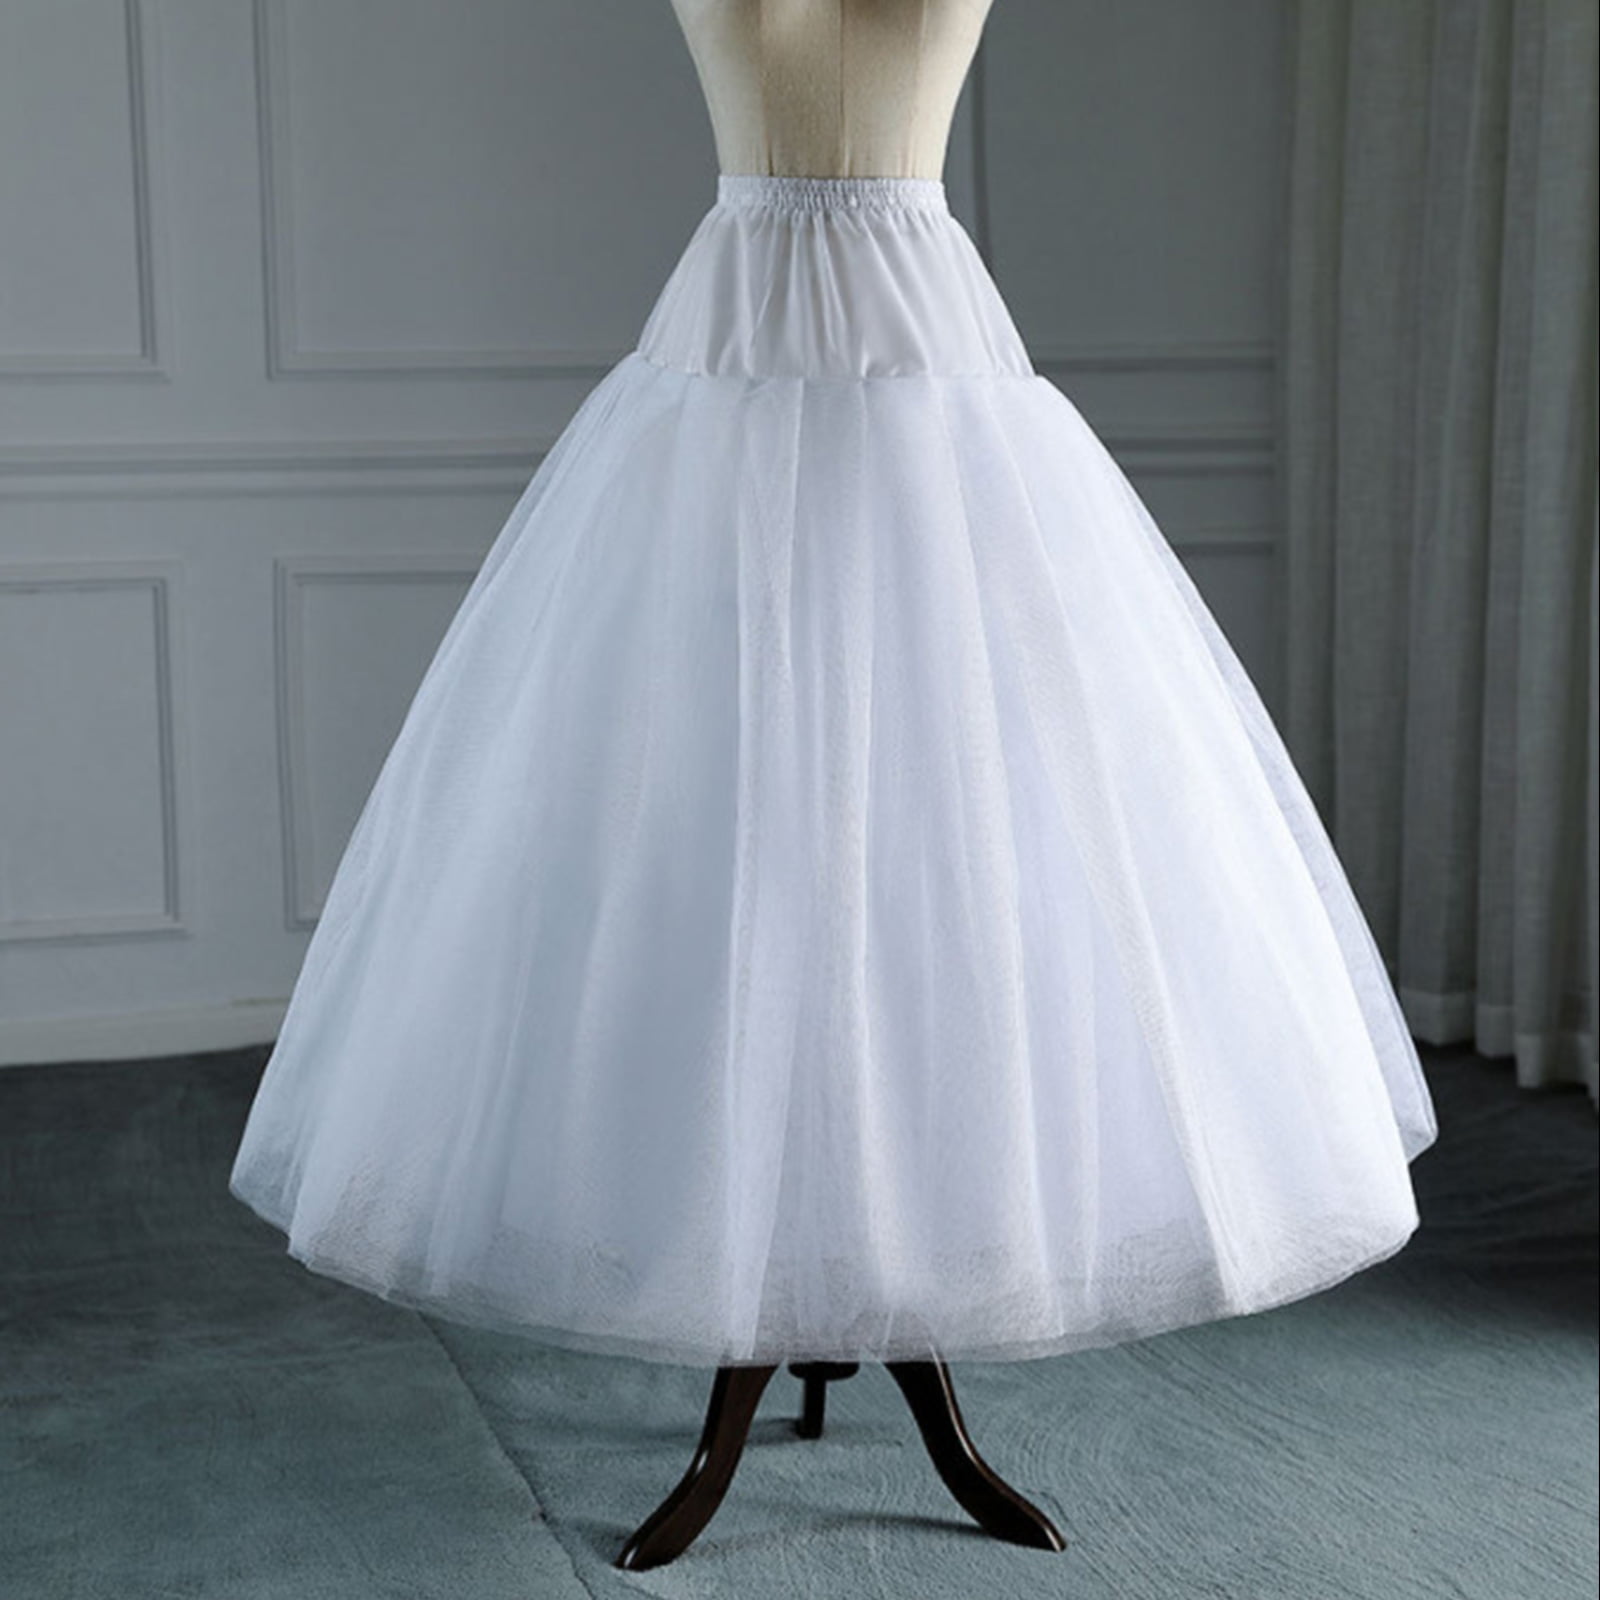 Wedding Dress Crinoline Multi-layer Petticoat / Ball Gown Bridal Petticoat  With Ruffles, Hoops and Bones / Light Underskirt P-350 Cm - Etsy